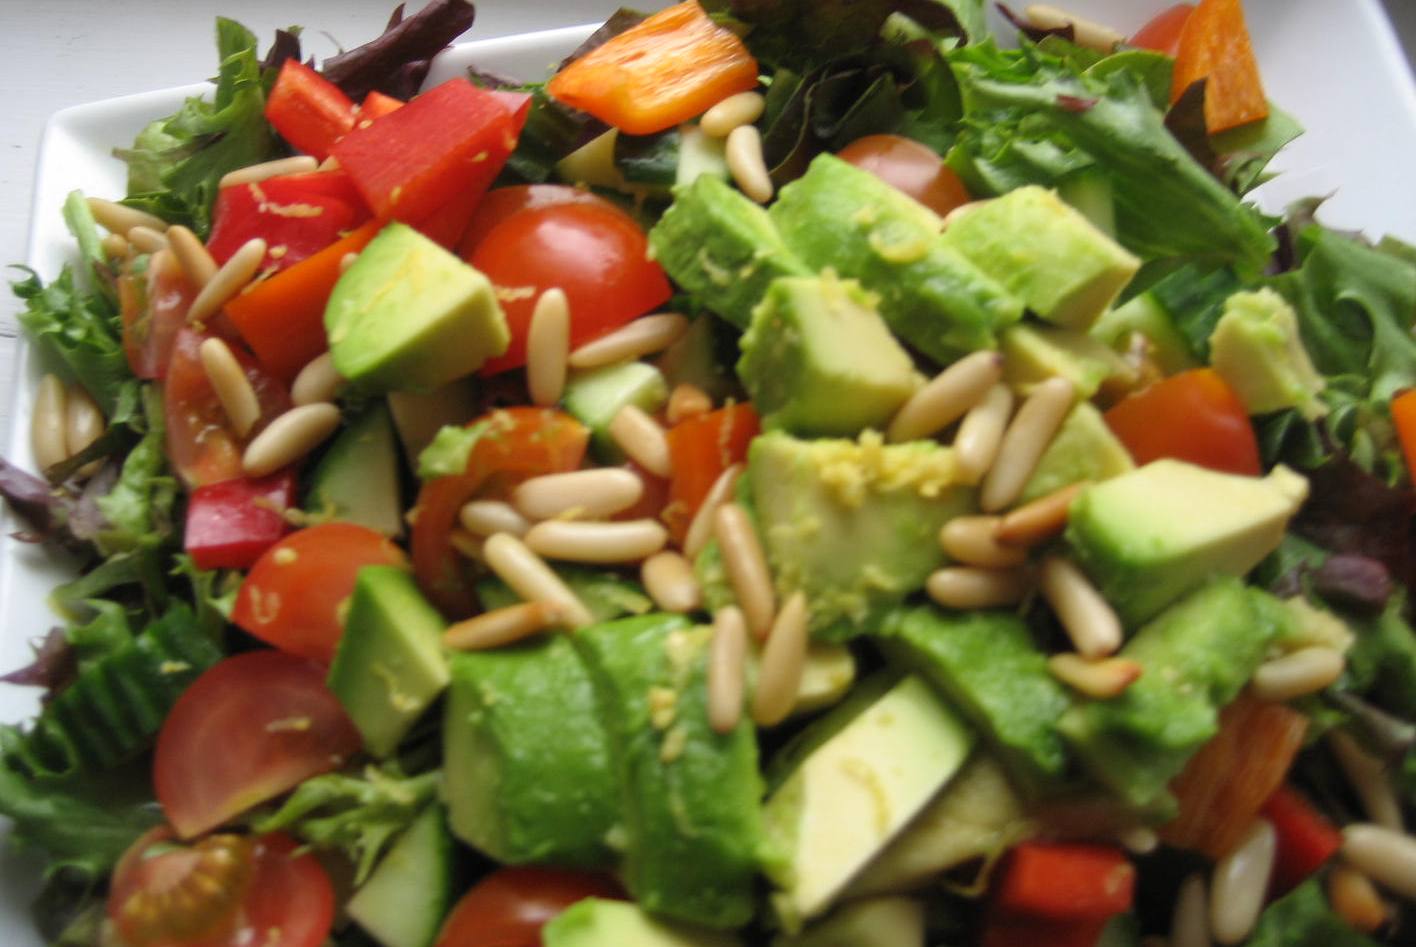 verden: Økologisk Ribeye bøf med luksus salat (salade de luxe)